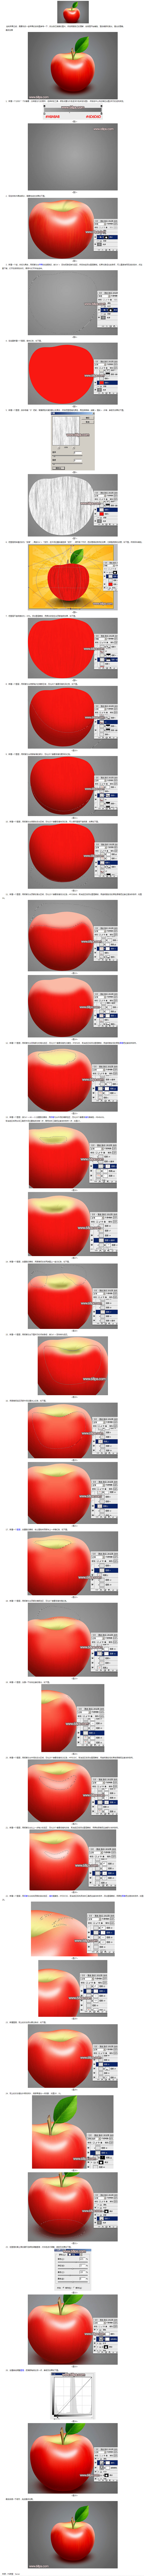 Photoshop制作细腻逼真的红富士苹...